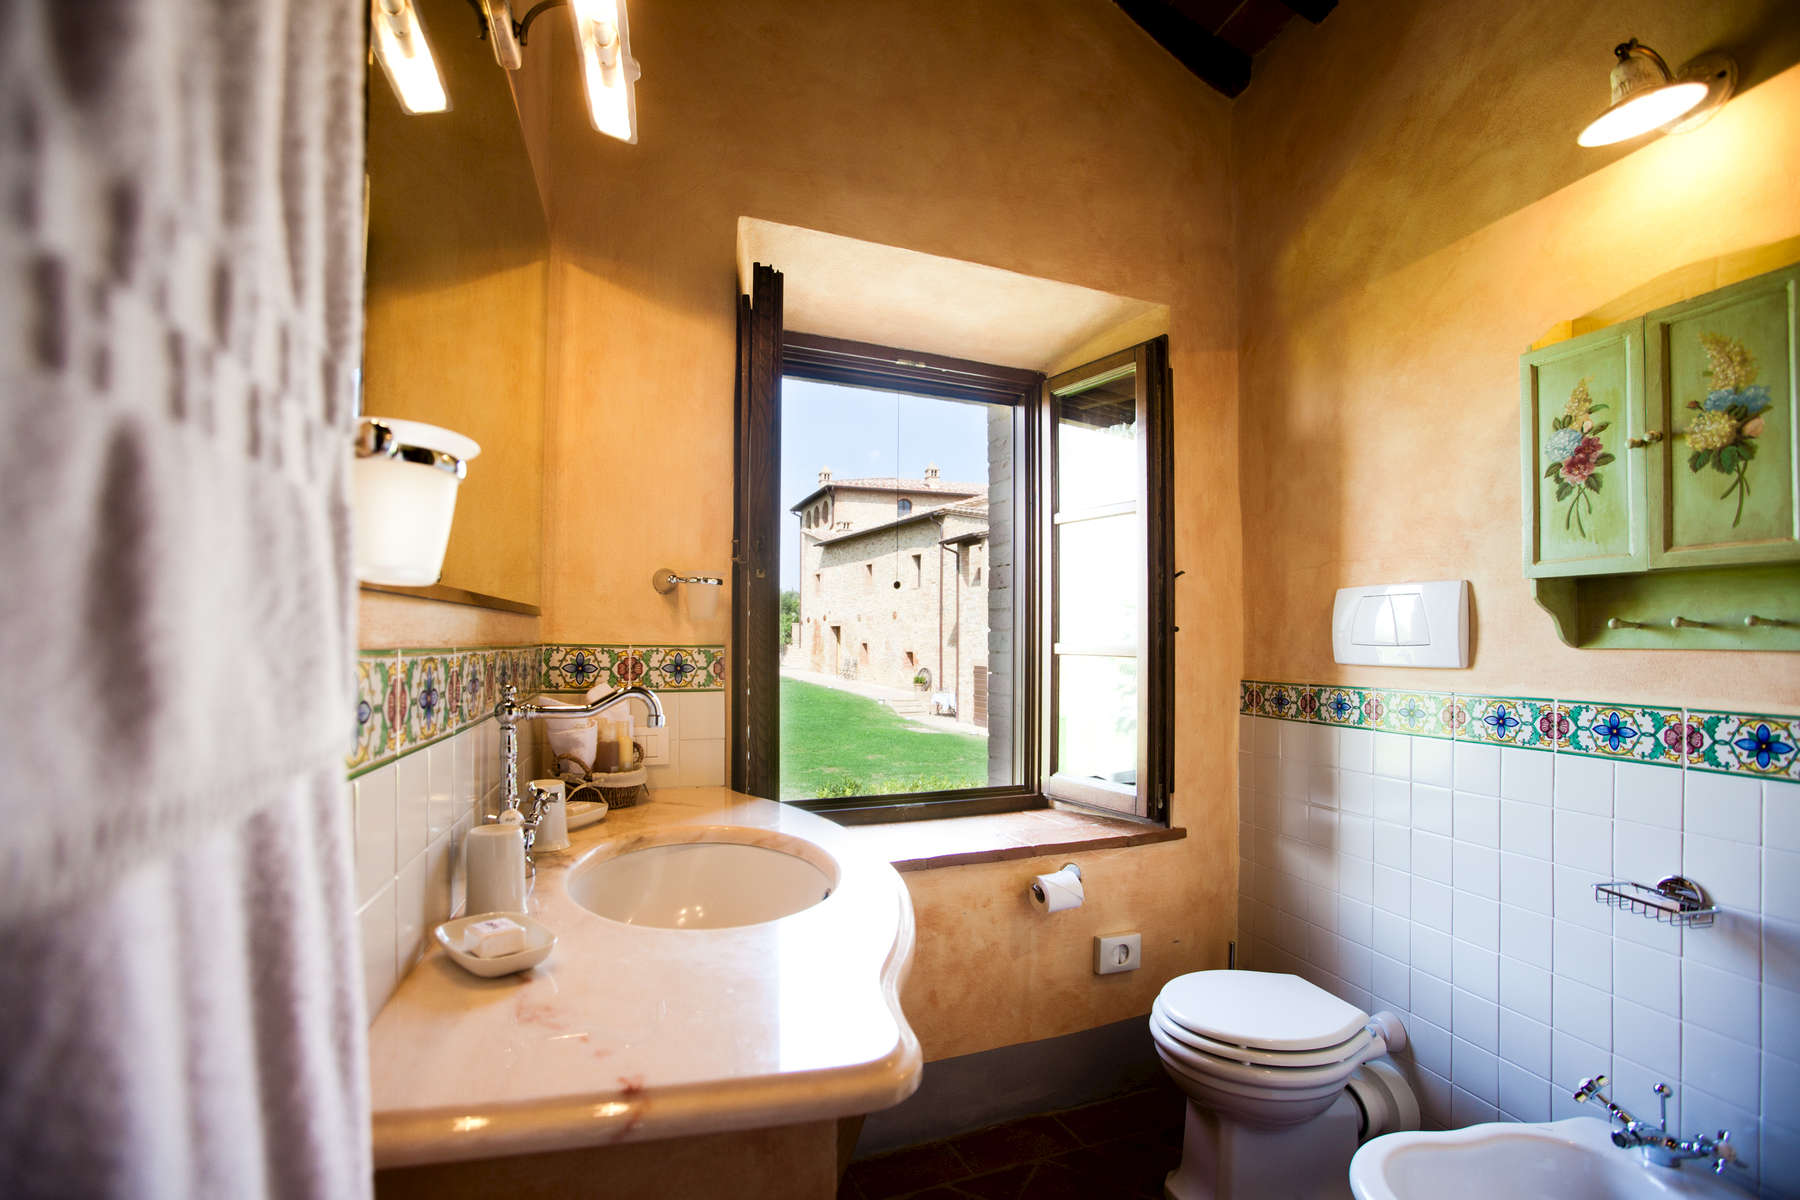 Giotto Bathroom